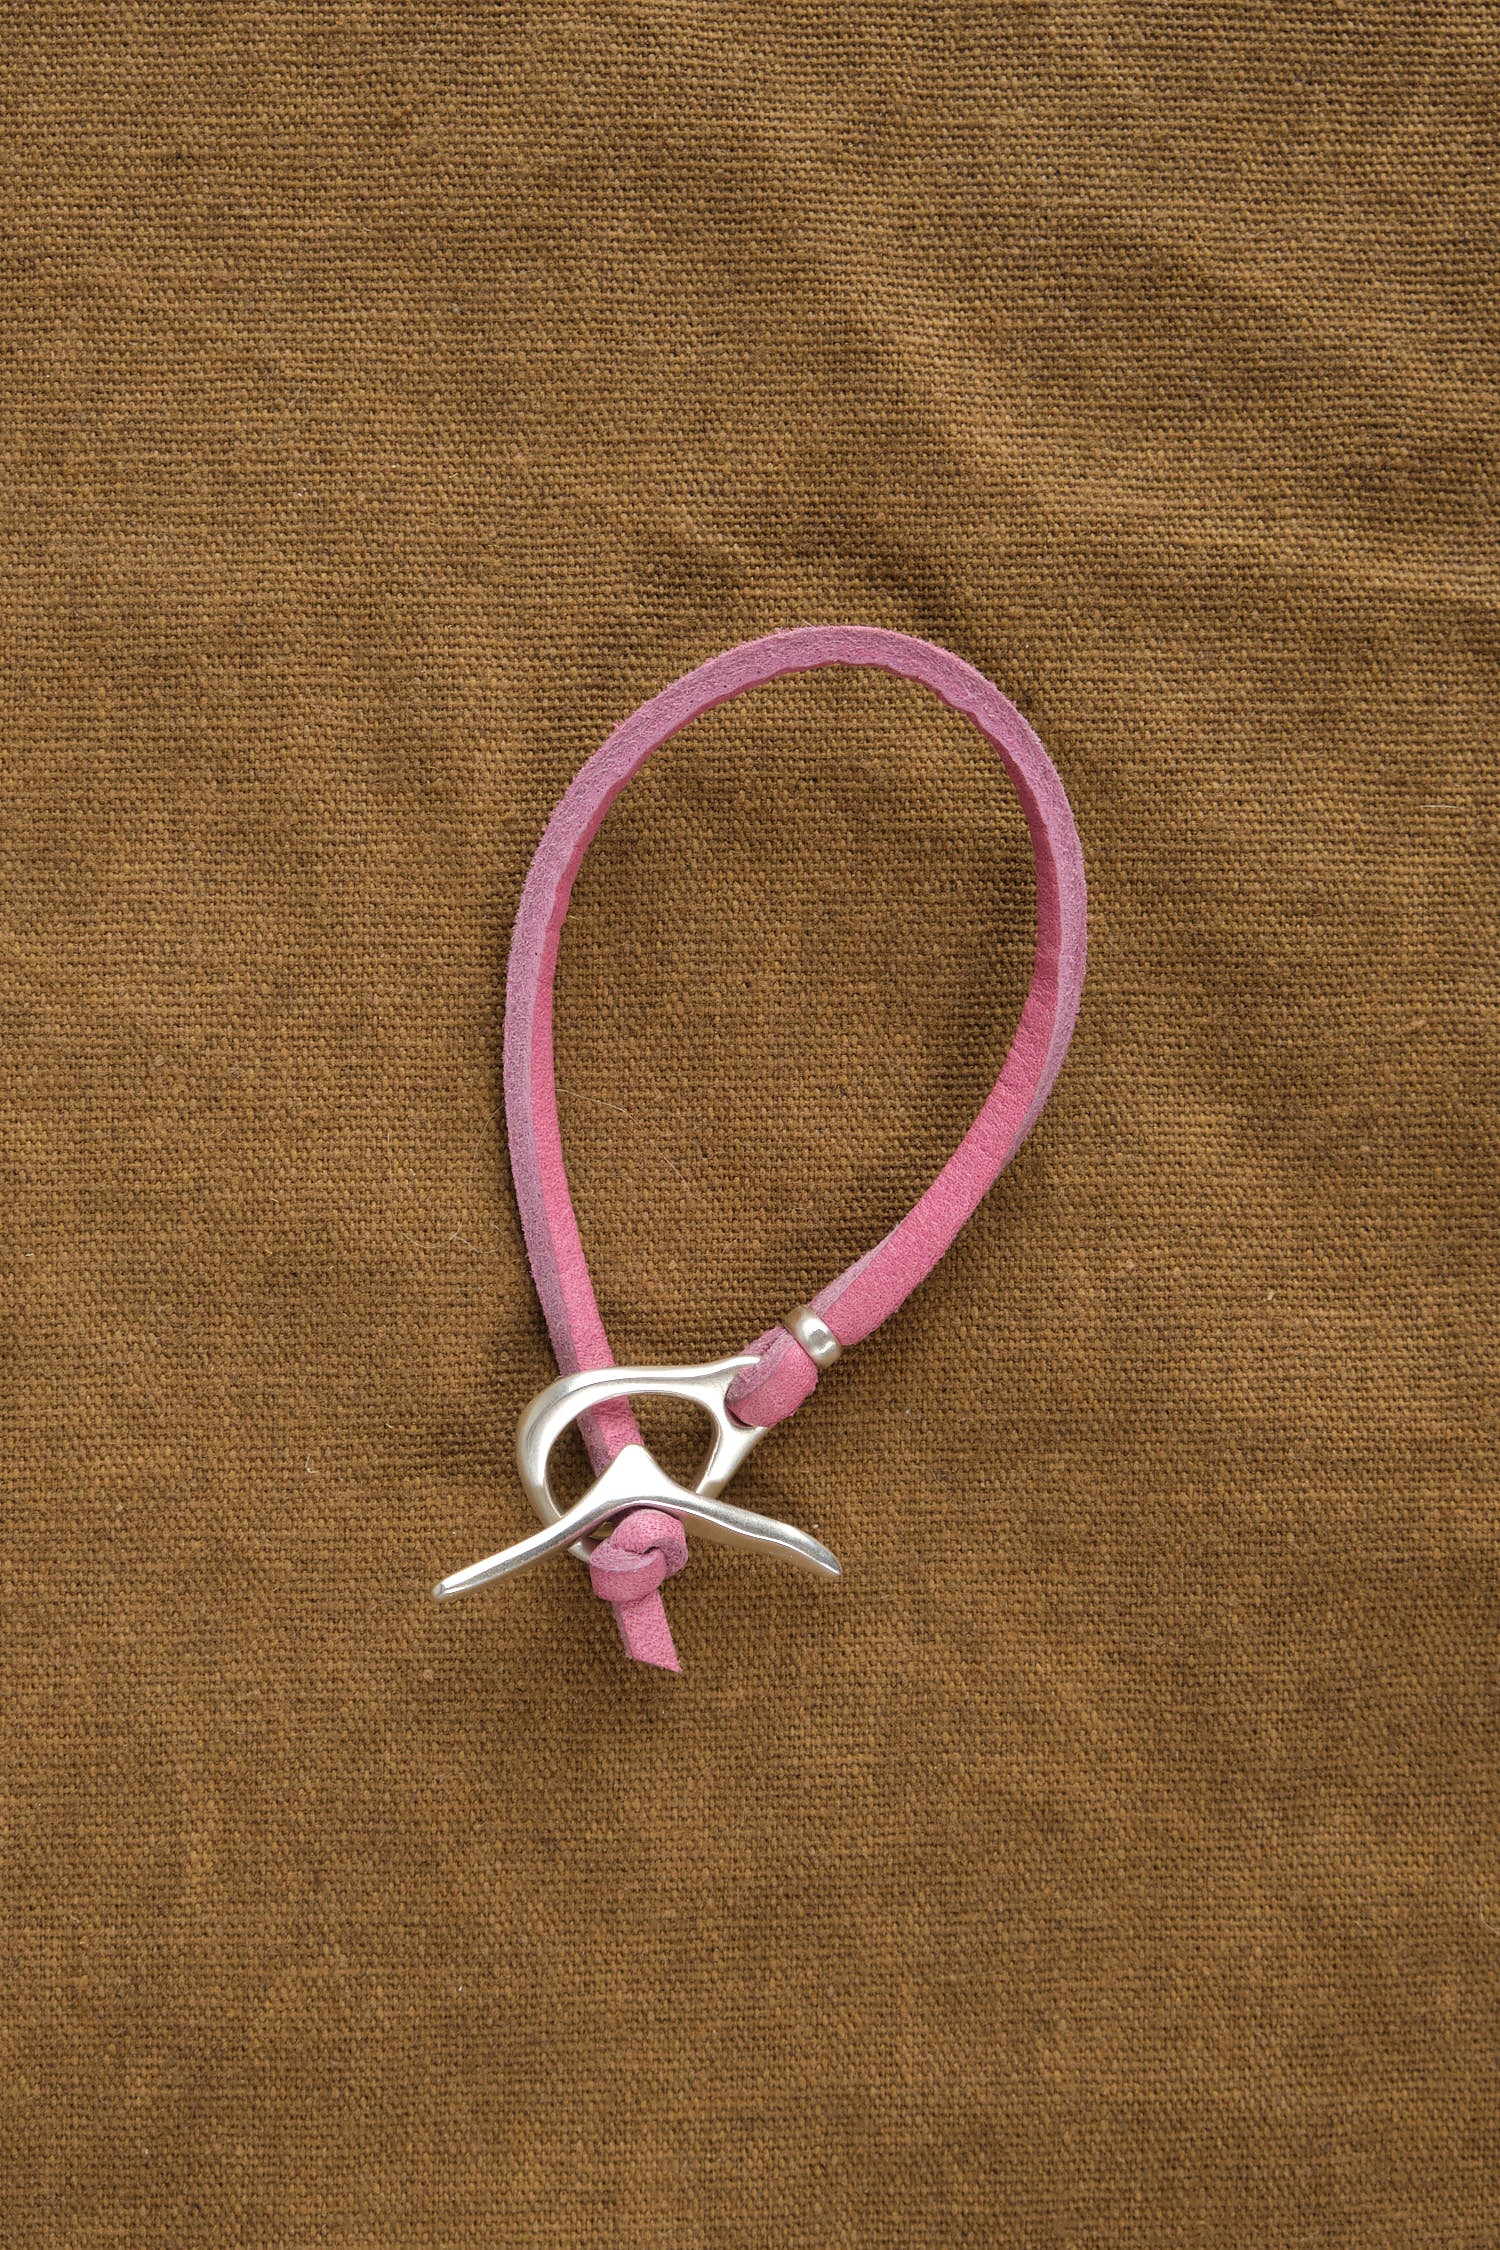 JP Clasp Rawhide Bracelet in Pink closed